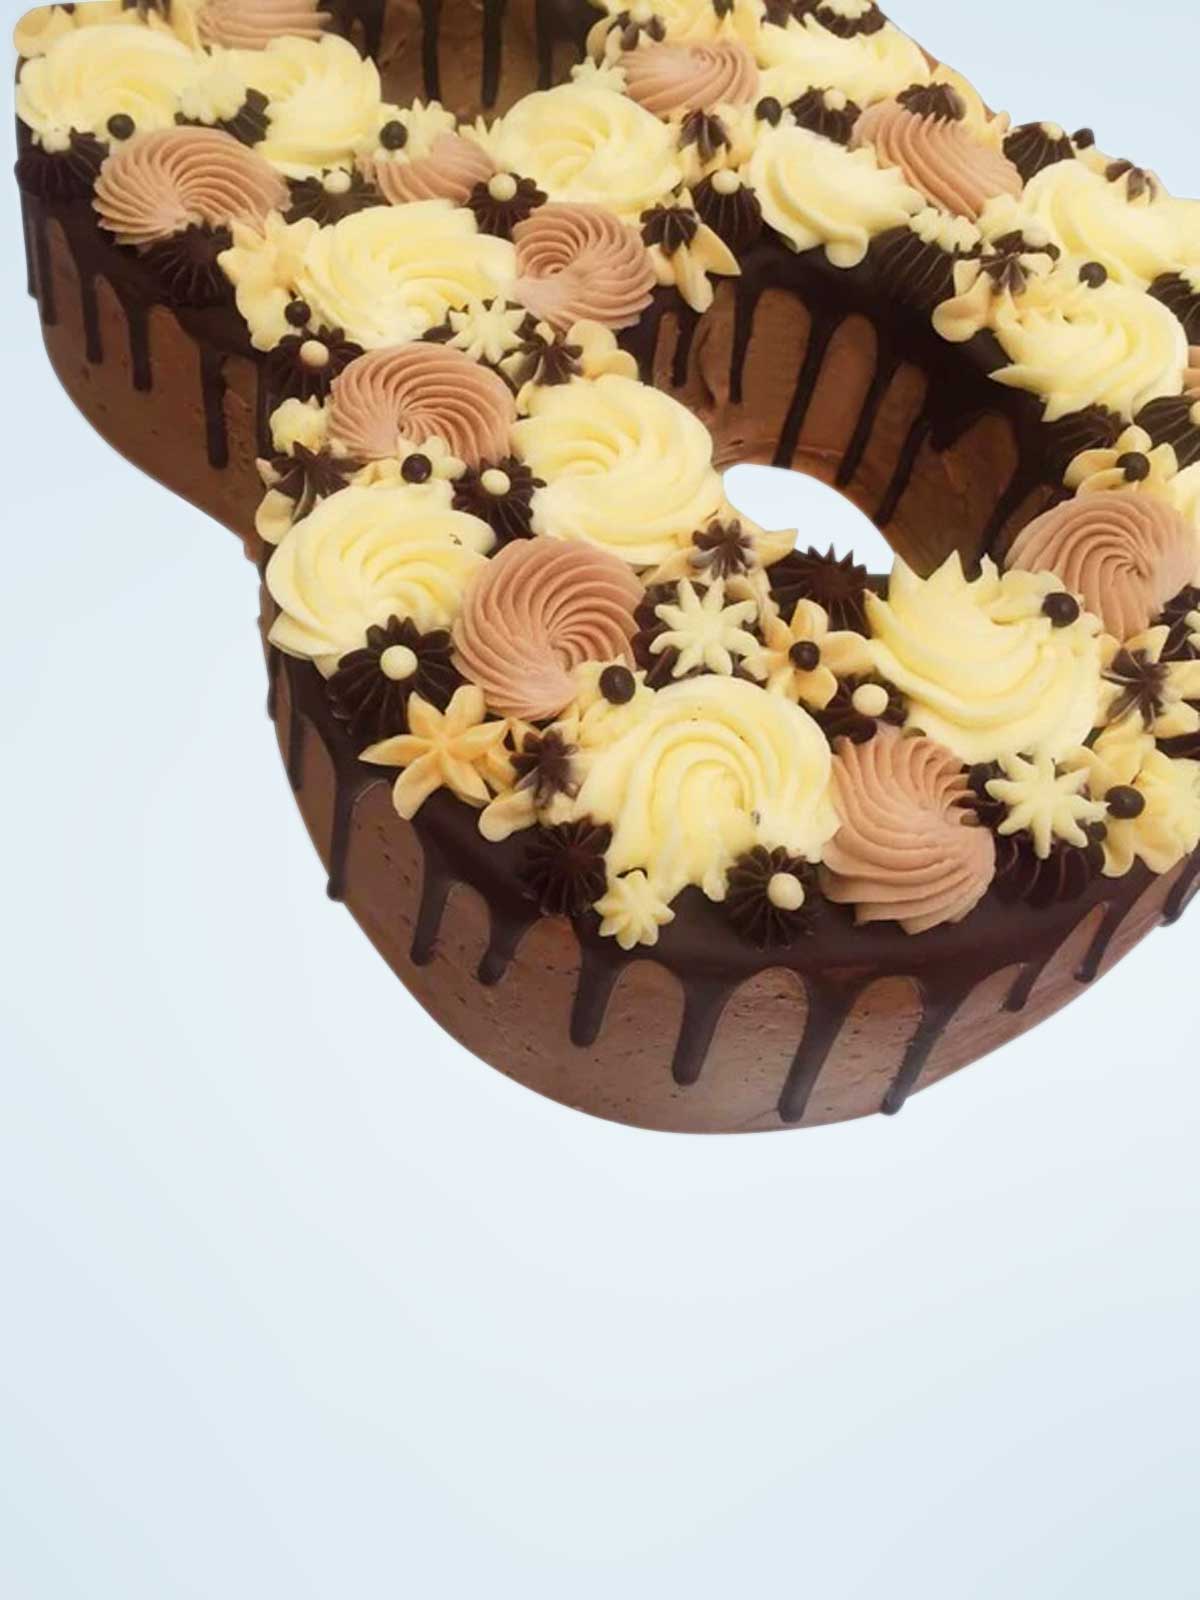 Chocolate Swirl Number Cake to Buy